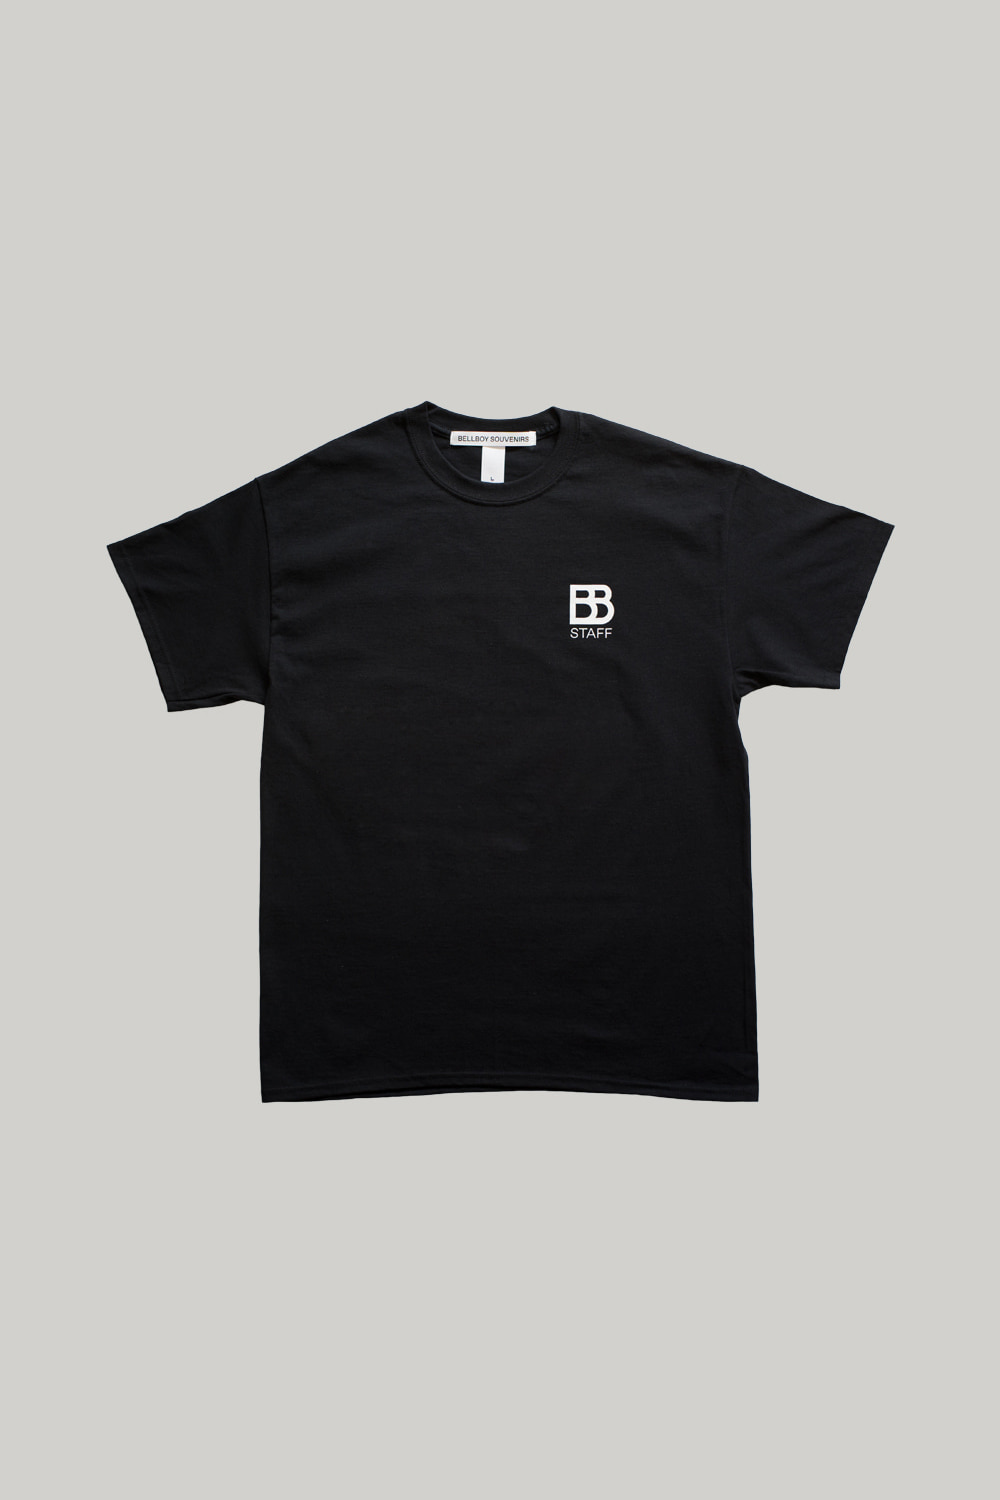 BELLBOY Staff T-Shirts - Black 티셔츠, 워시드 헤비웨이트 티셔츠, 옥스포드셔츠, 버튼다운셔츠, 메신저백, 캔버스백